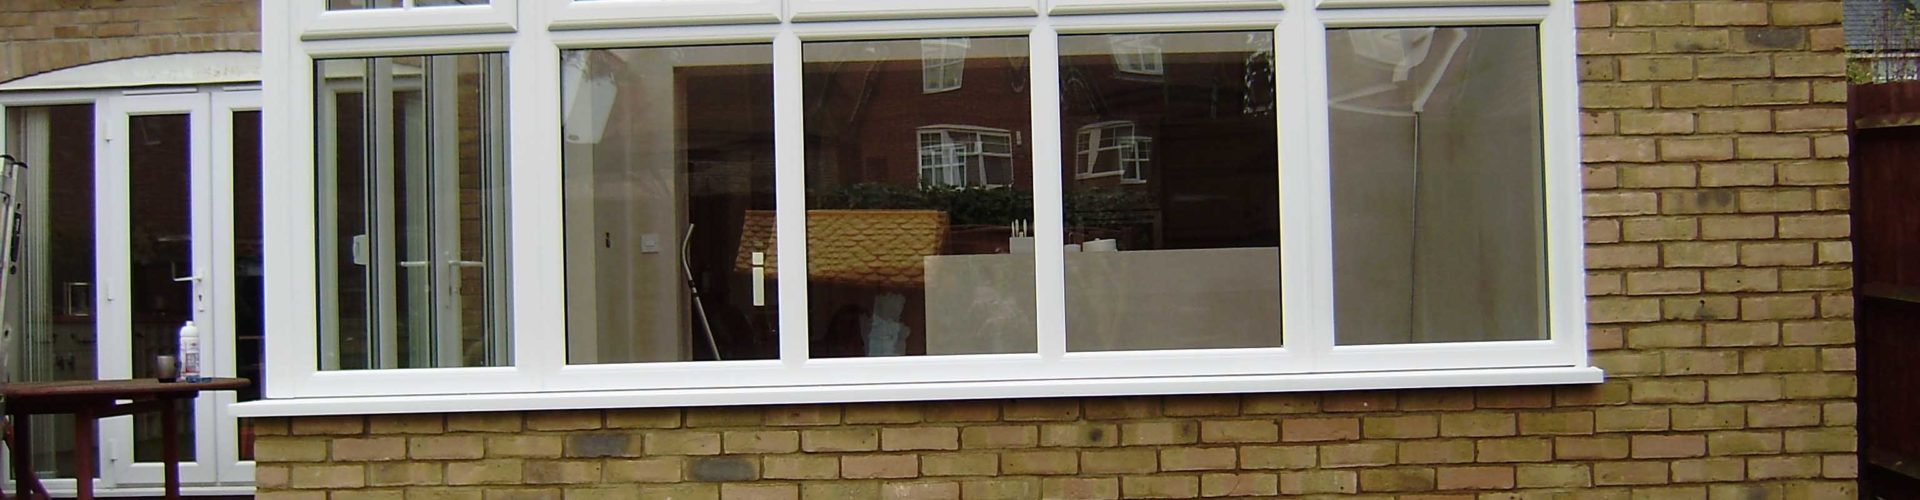 upvc windows conservatories